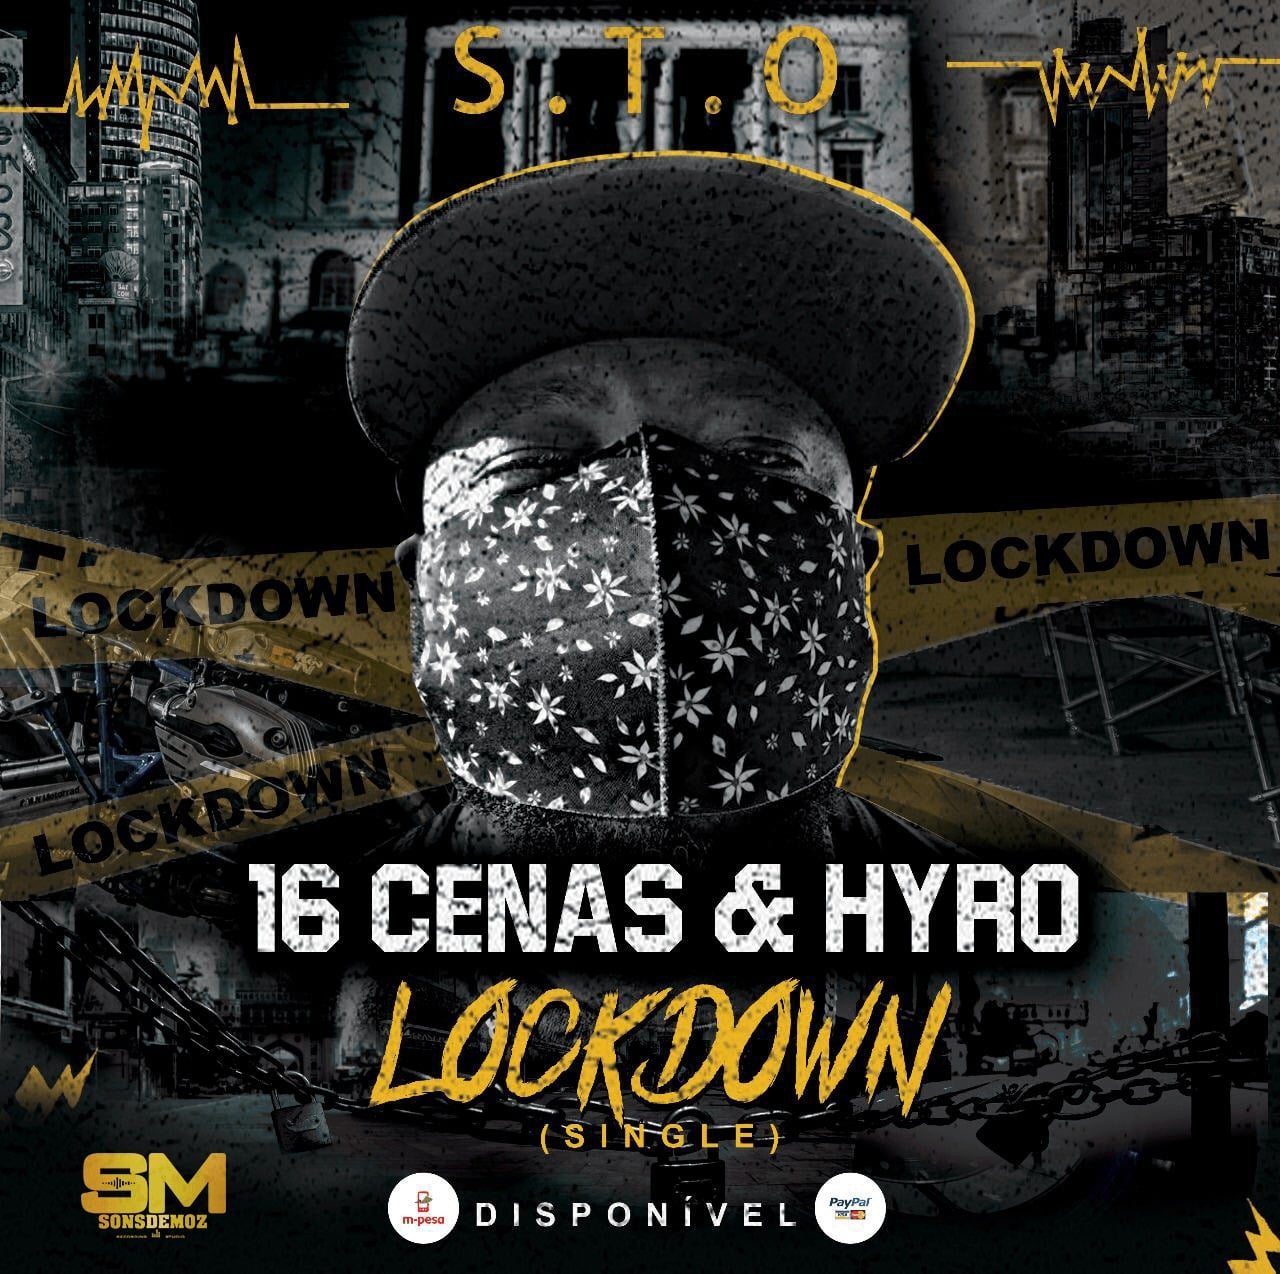 16 Cenas & Hyro x 3H ft. Nikotina & Freak son - Lockdown e Vingança Remix